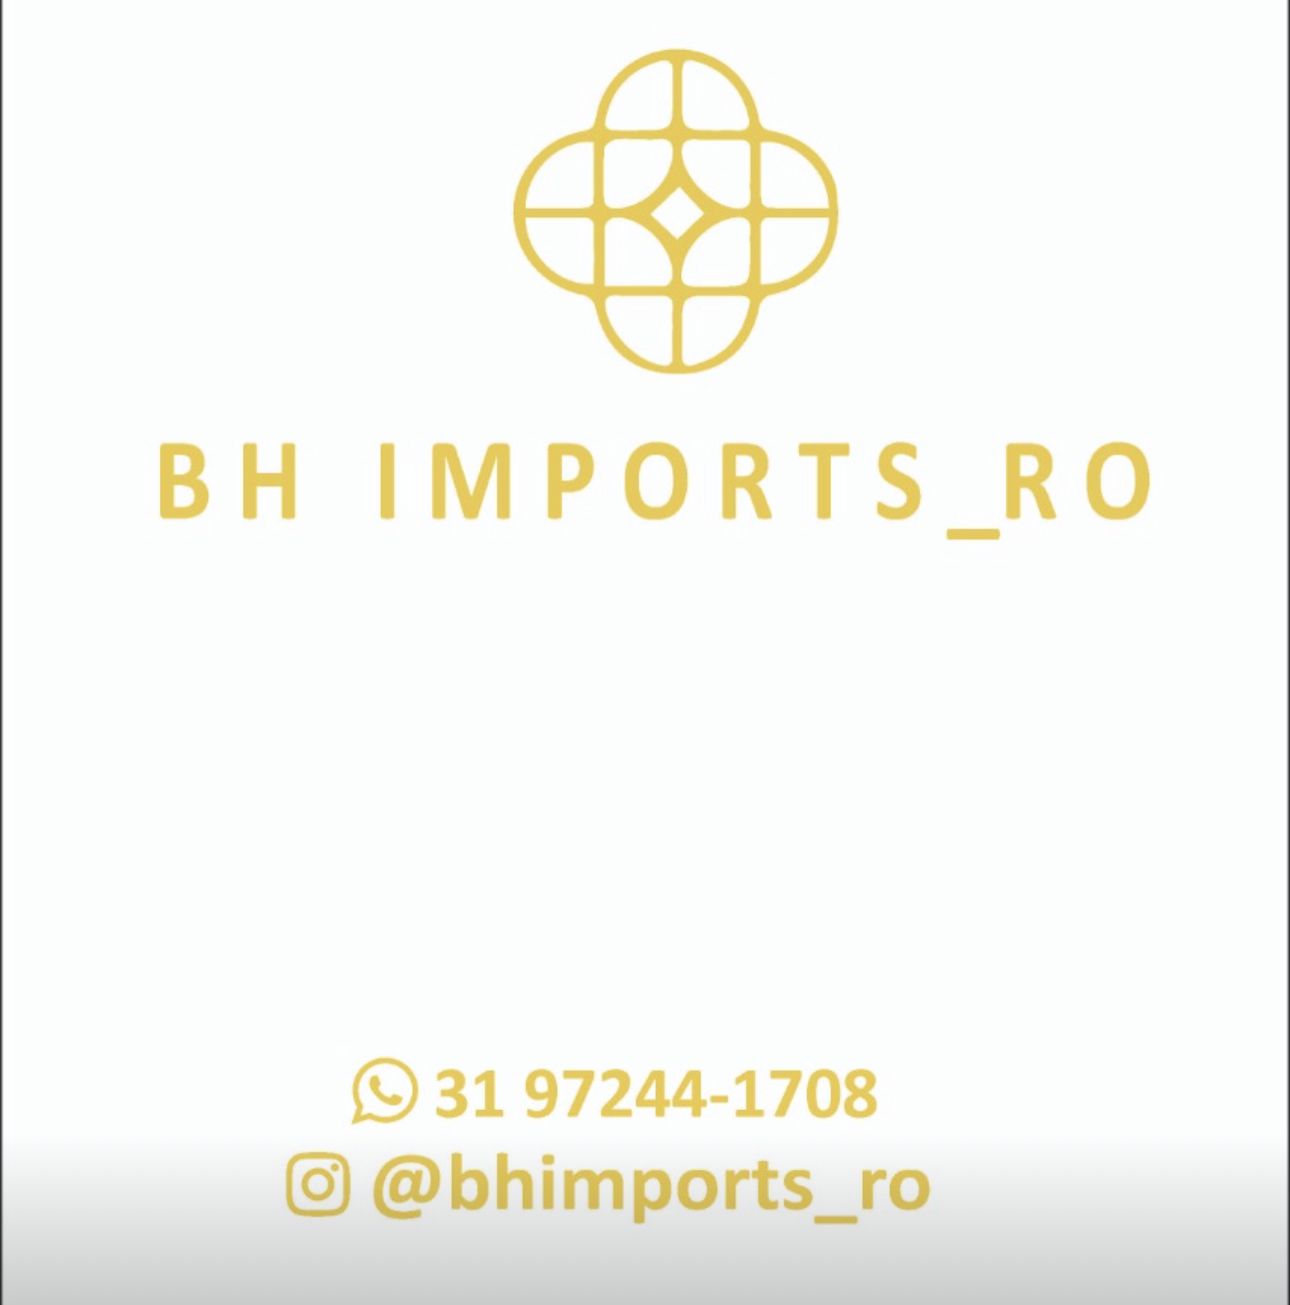 Bhimports_Ro